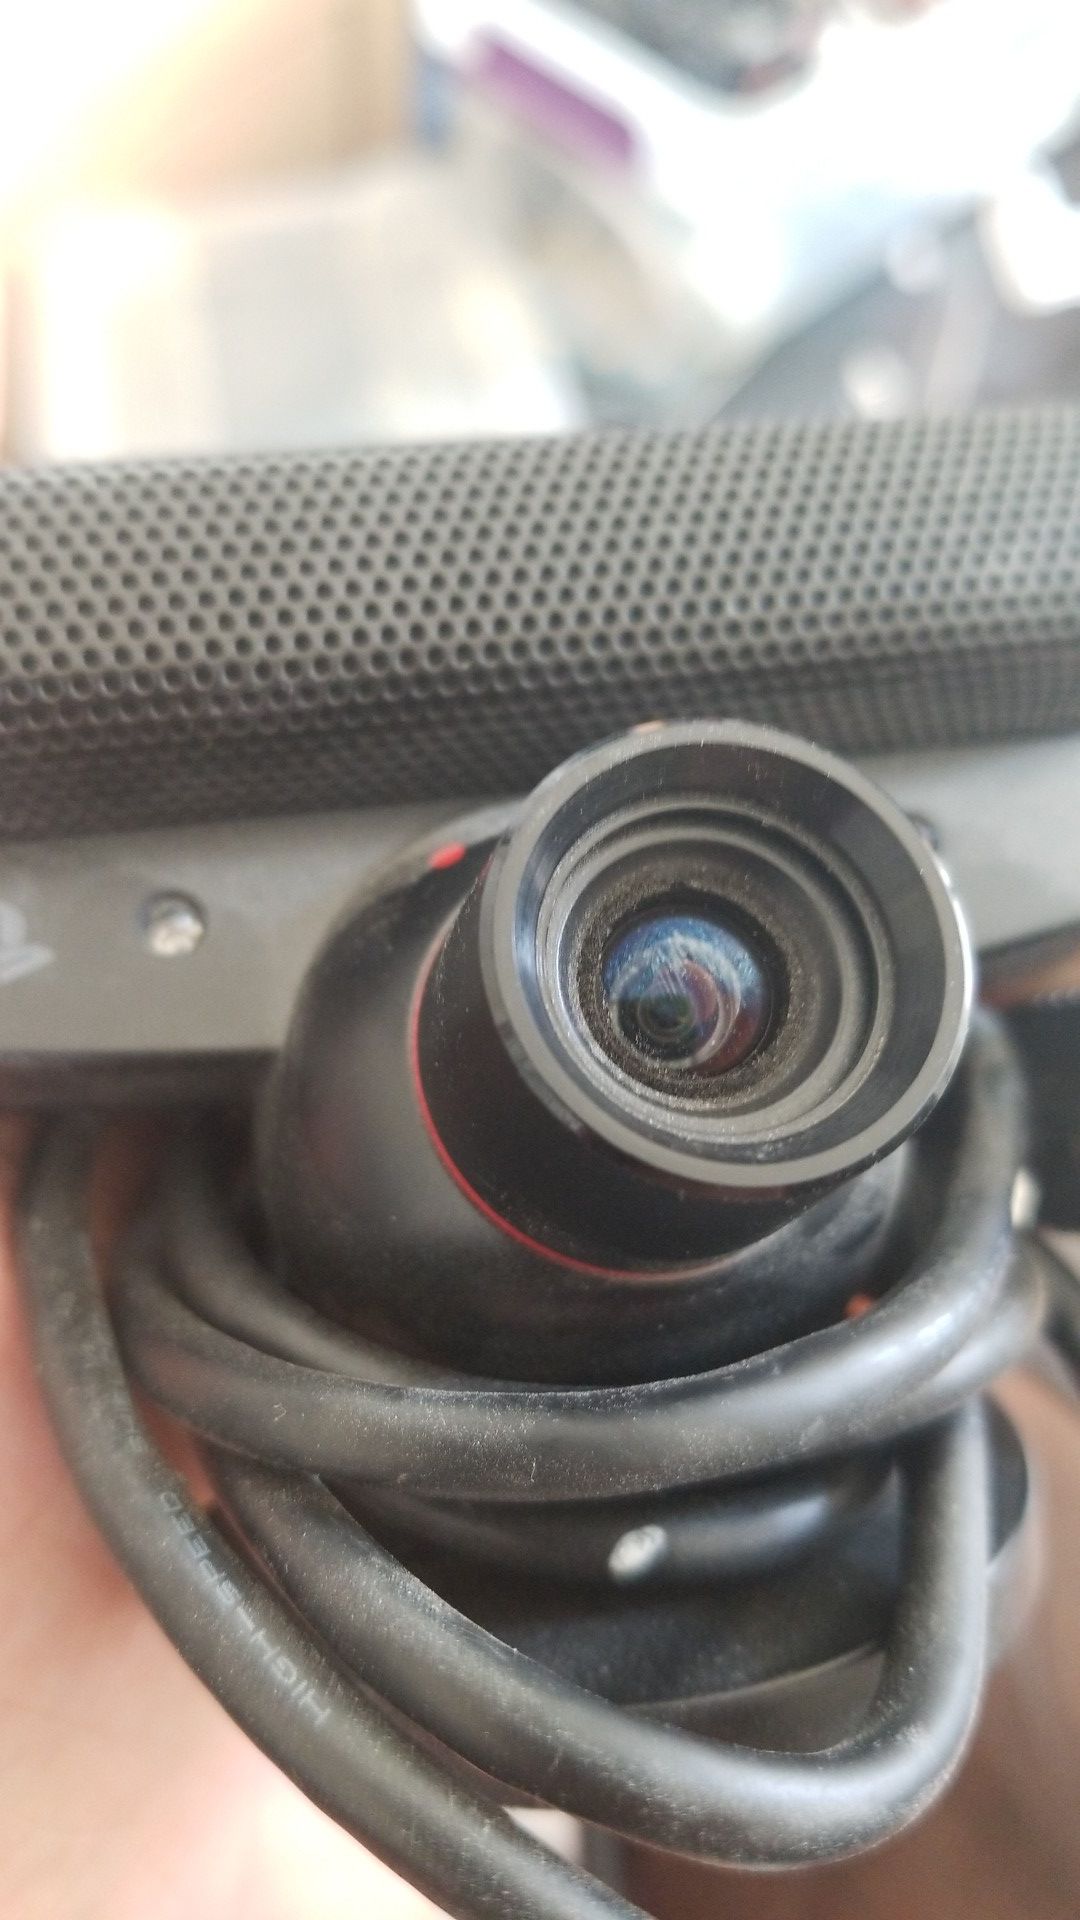 PS3 eye cam works!!